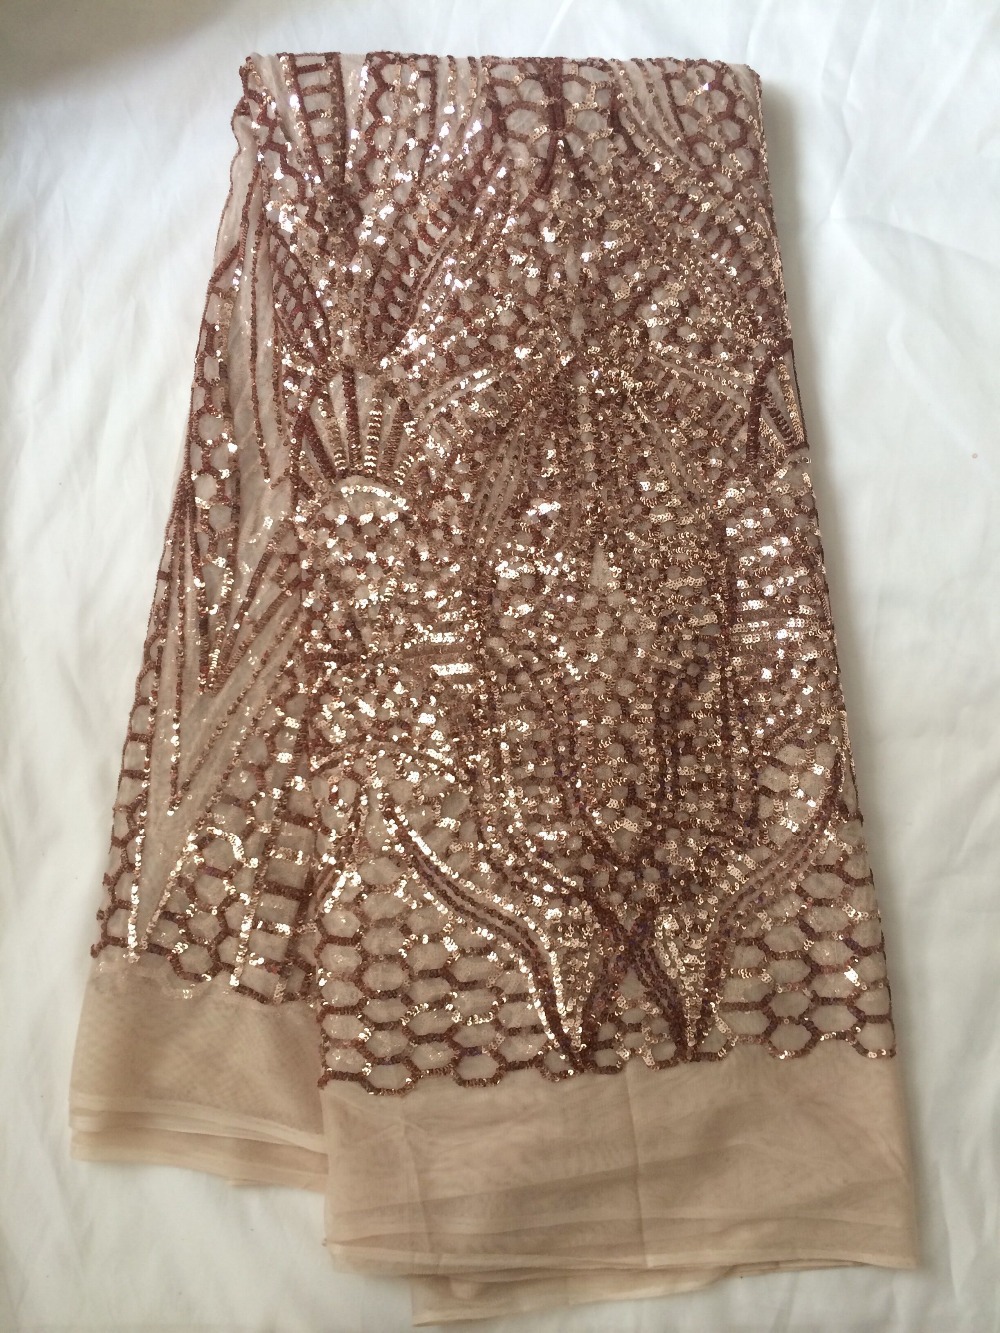 Sequin Dress Fabric